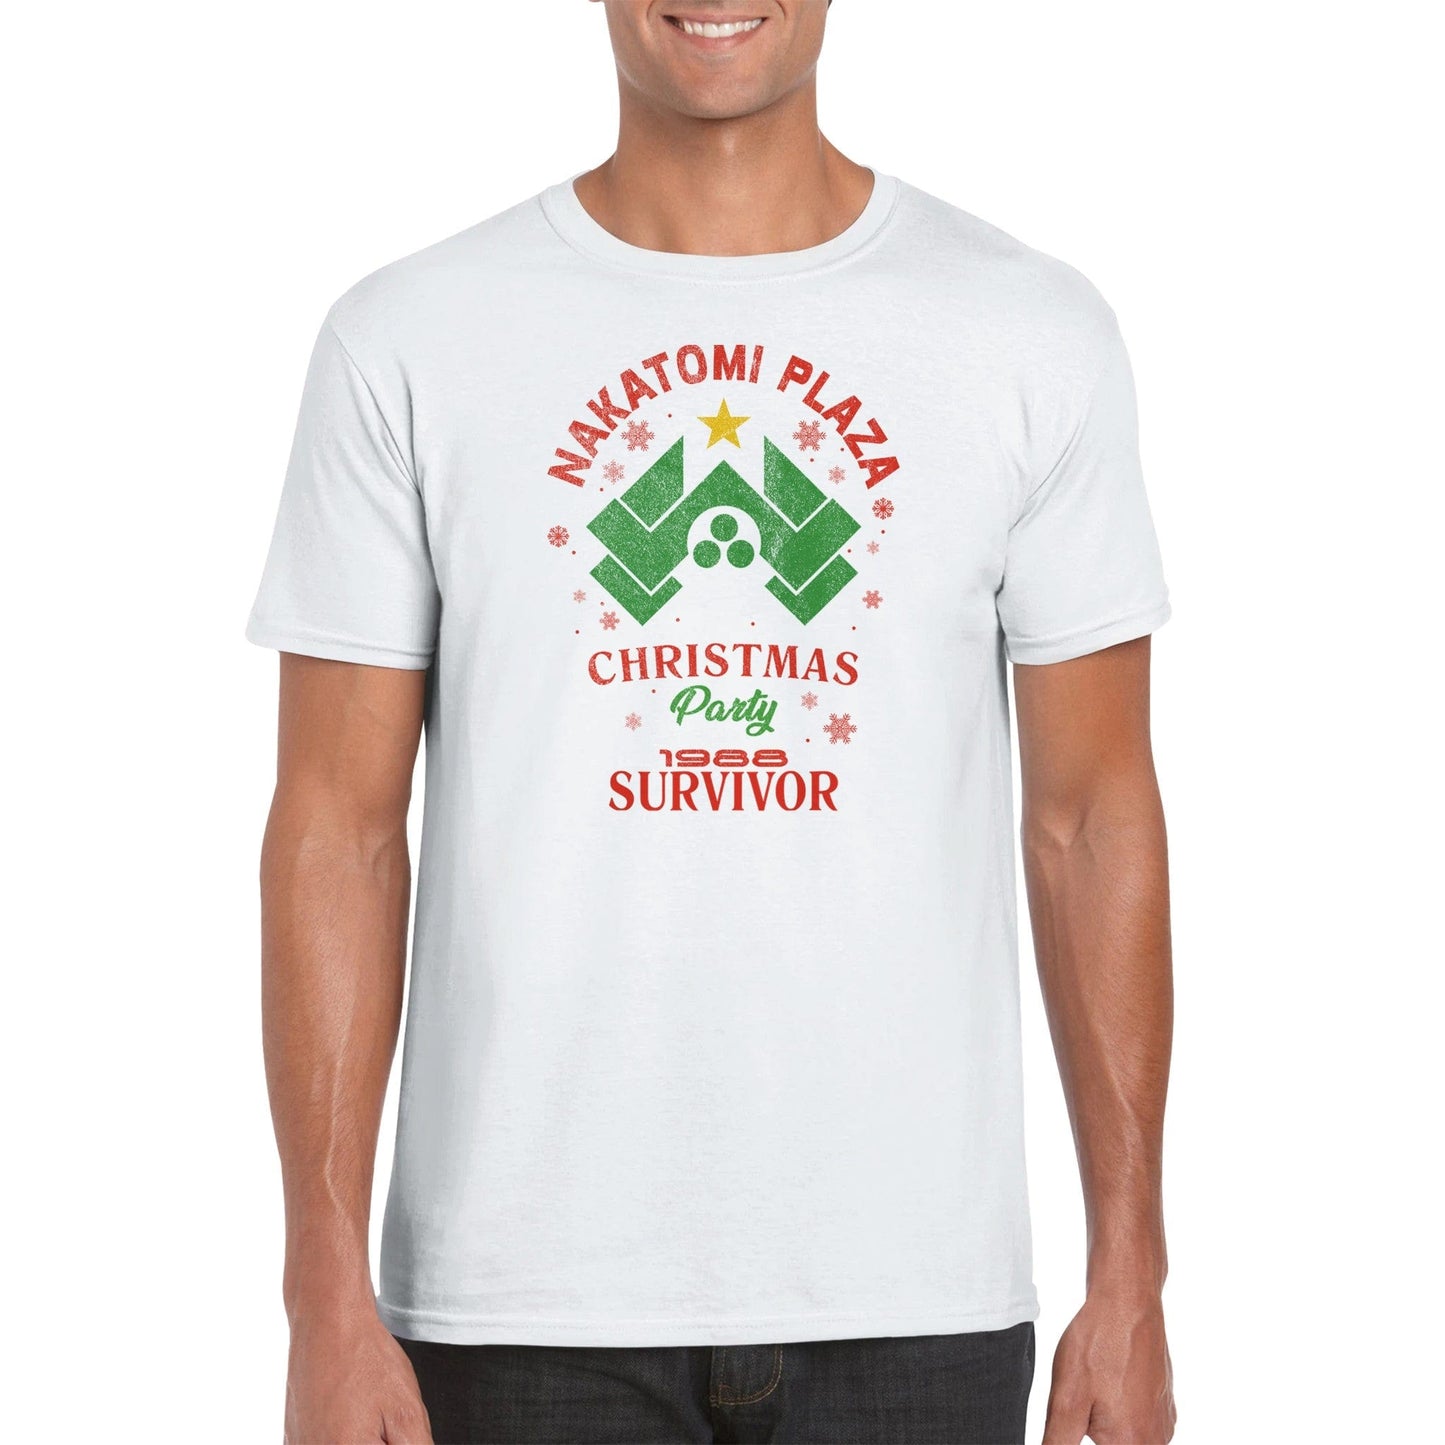 NAKATOMI PLAZA CHRISTMAS PARTY SURVIVOR T-Shirt Australia Online Color White / S